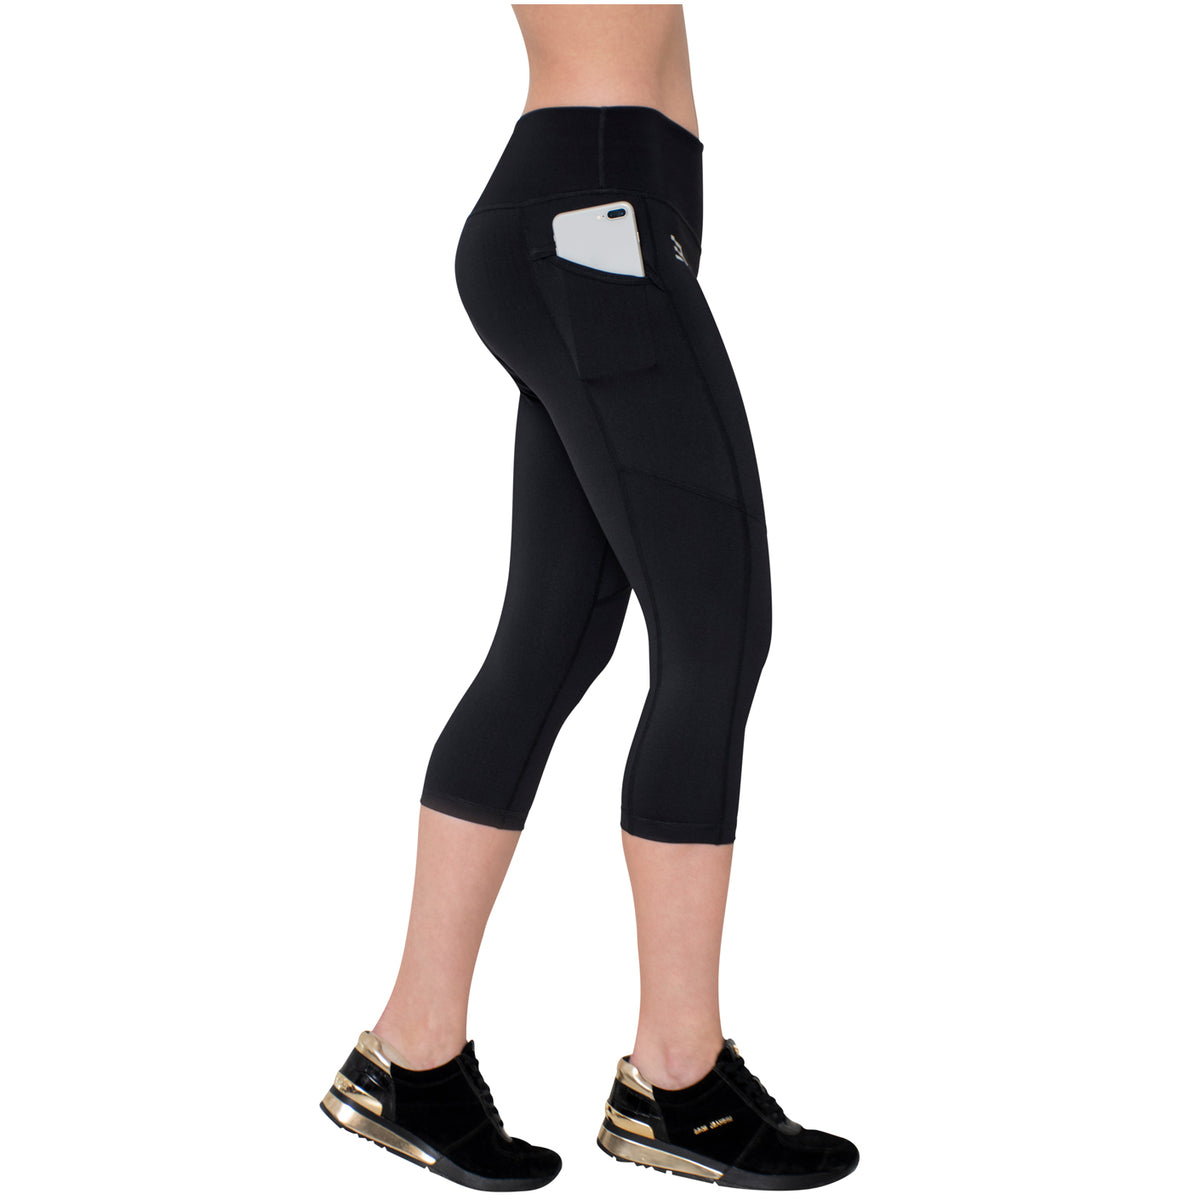 SYRINX High Waisted Leggings for Women - Soft Athletic Tummy